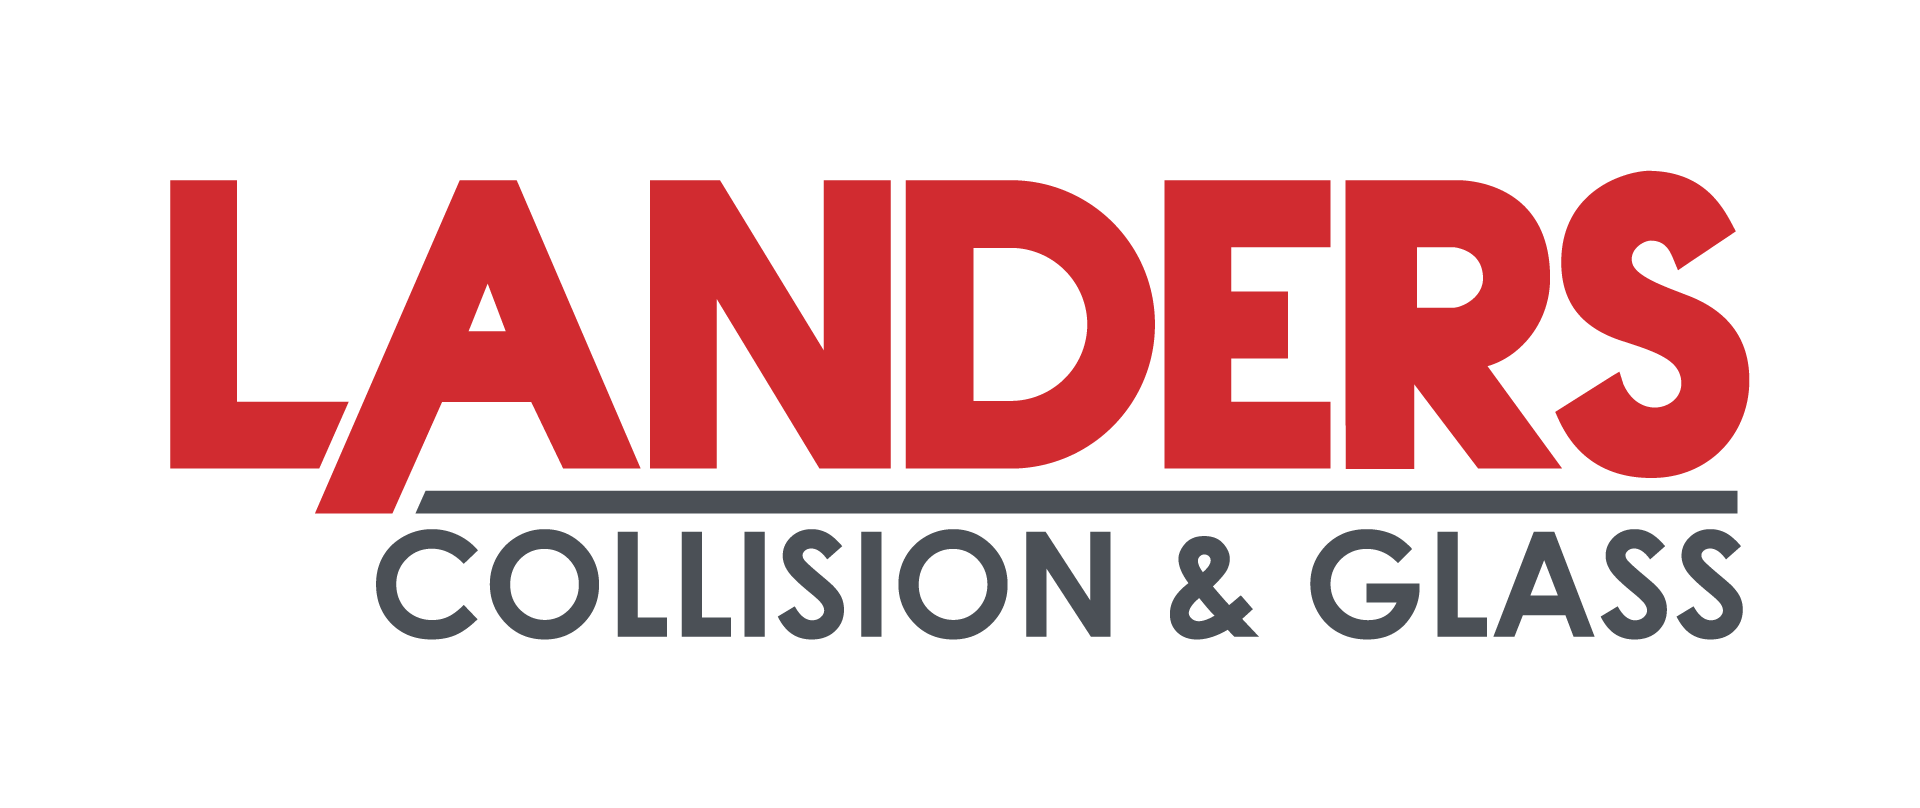 Landers Collision & Glass Logo